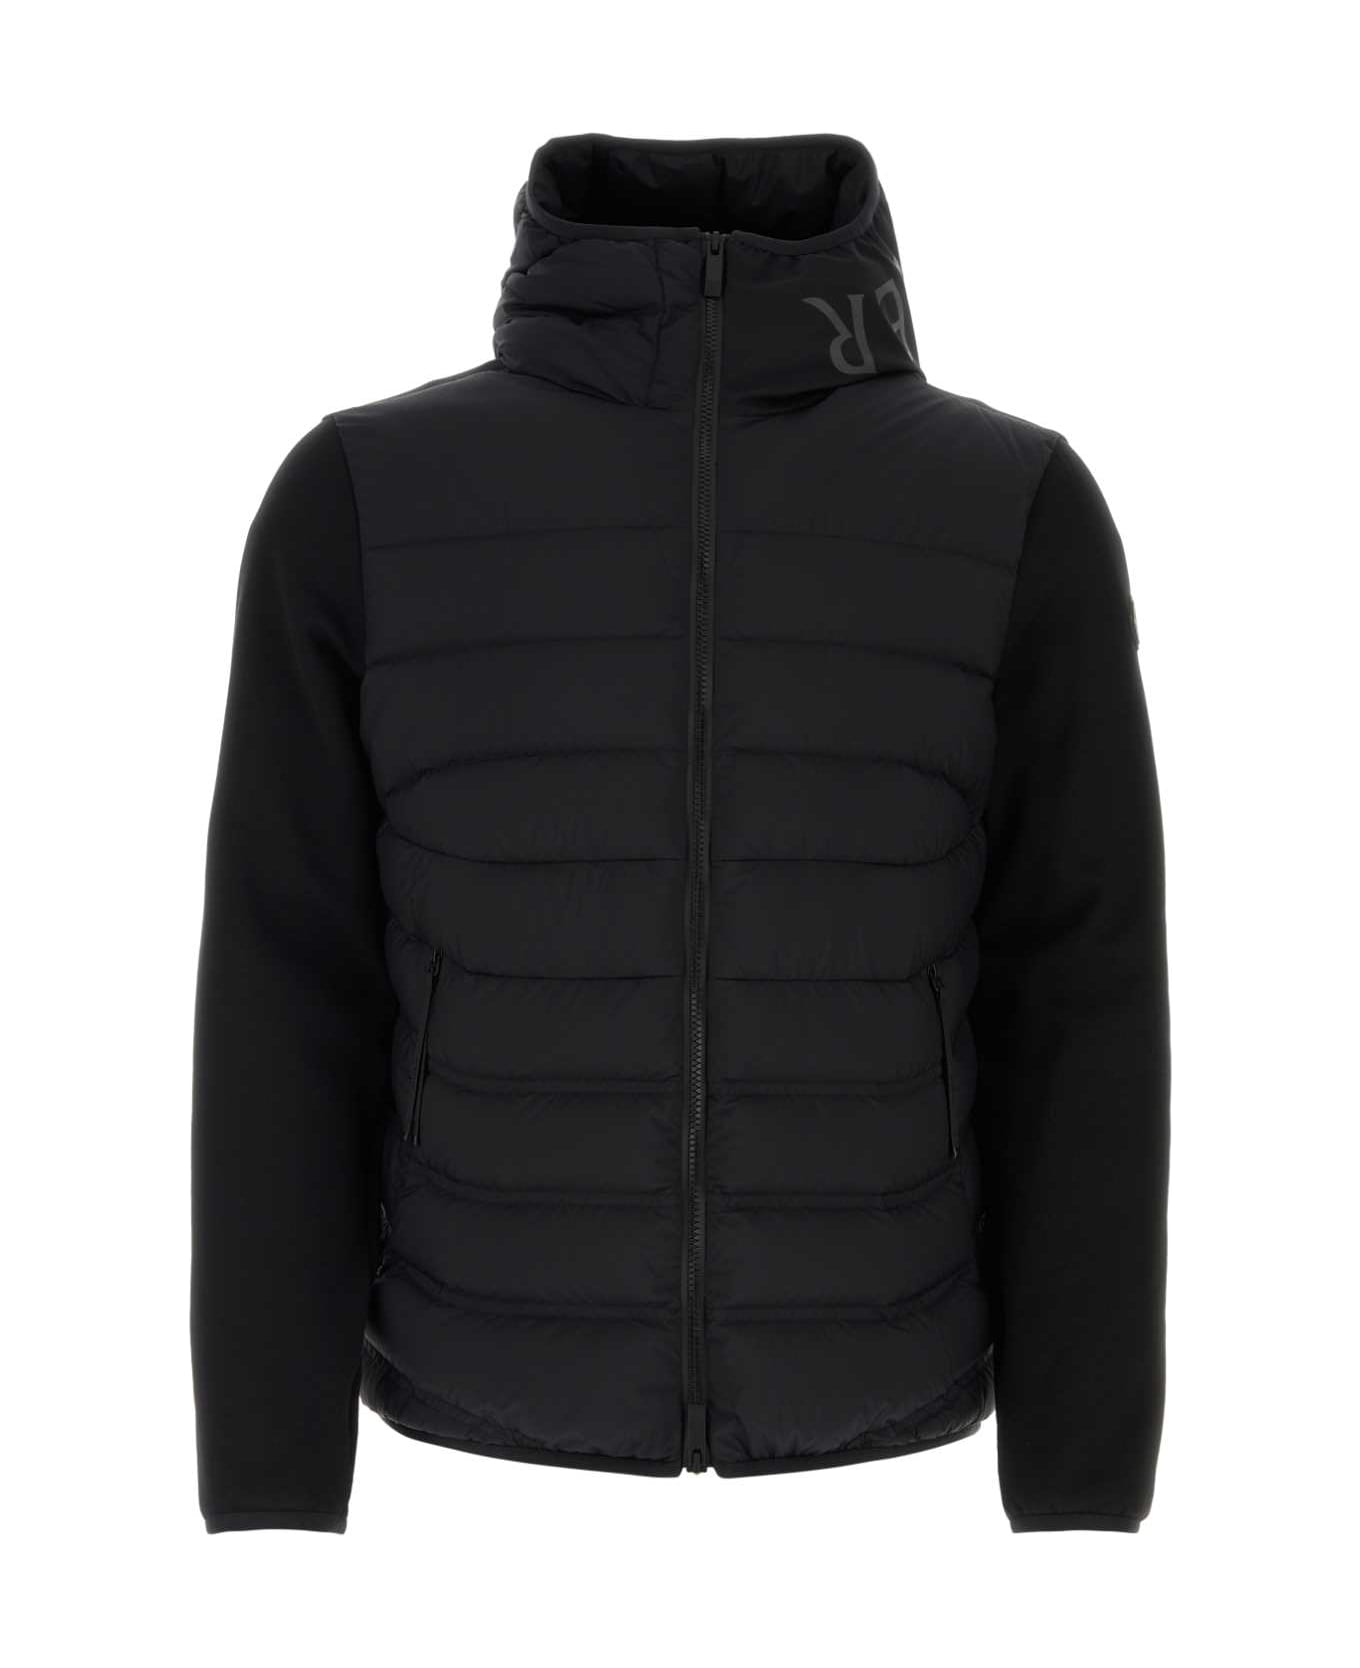 Moncler Black Cotton And Nylon Zip Up Jacket - 999